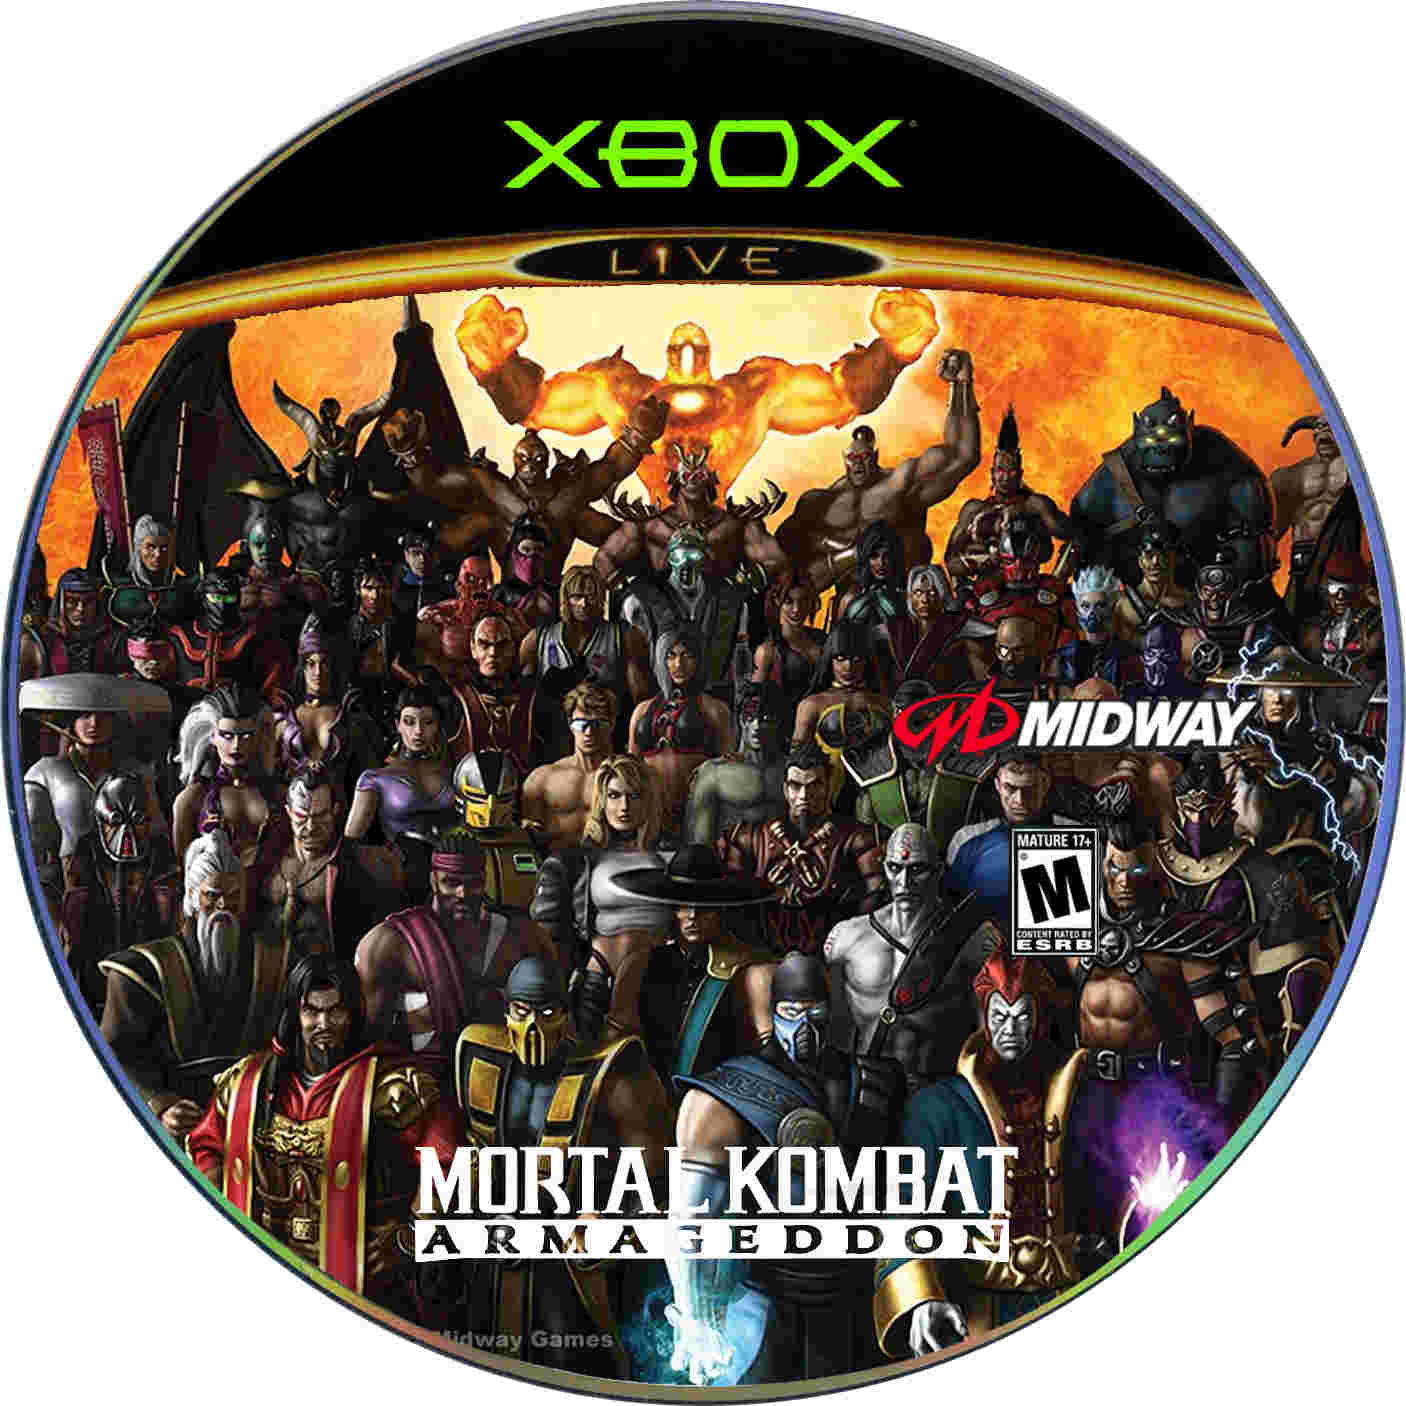 Саундтрек из мортал комбат слушать. Мортал комбат Армагеддон Xbox 360. Mortal Kombat Armageddon Xbox. Мортал комбат песни. Песня мортал комбат.